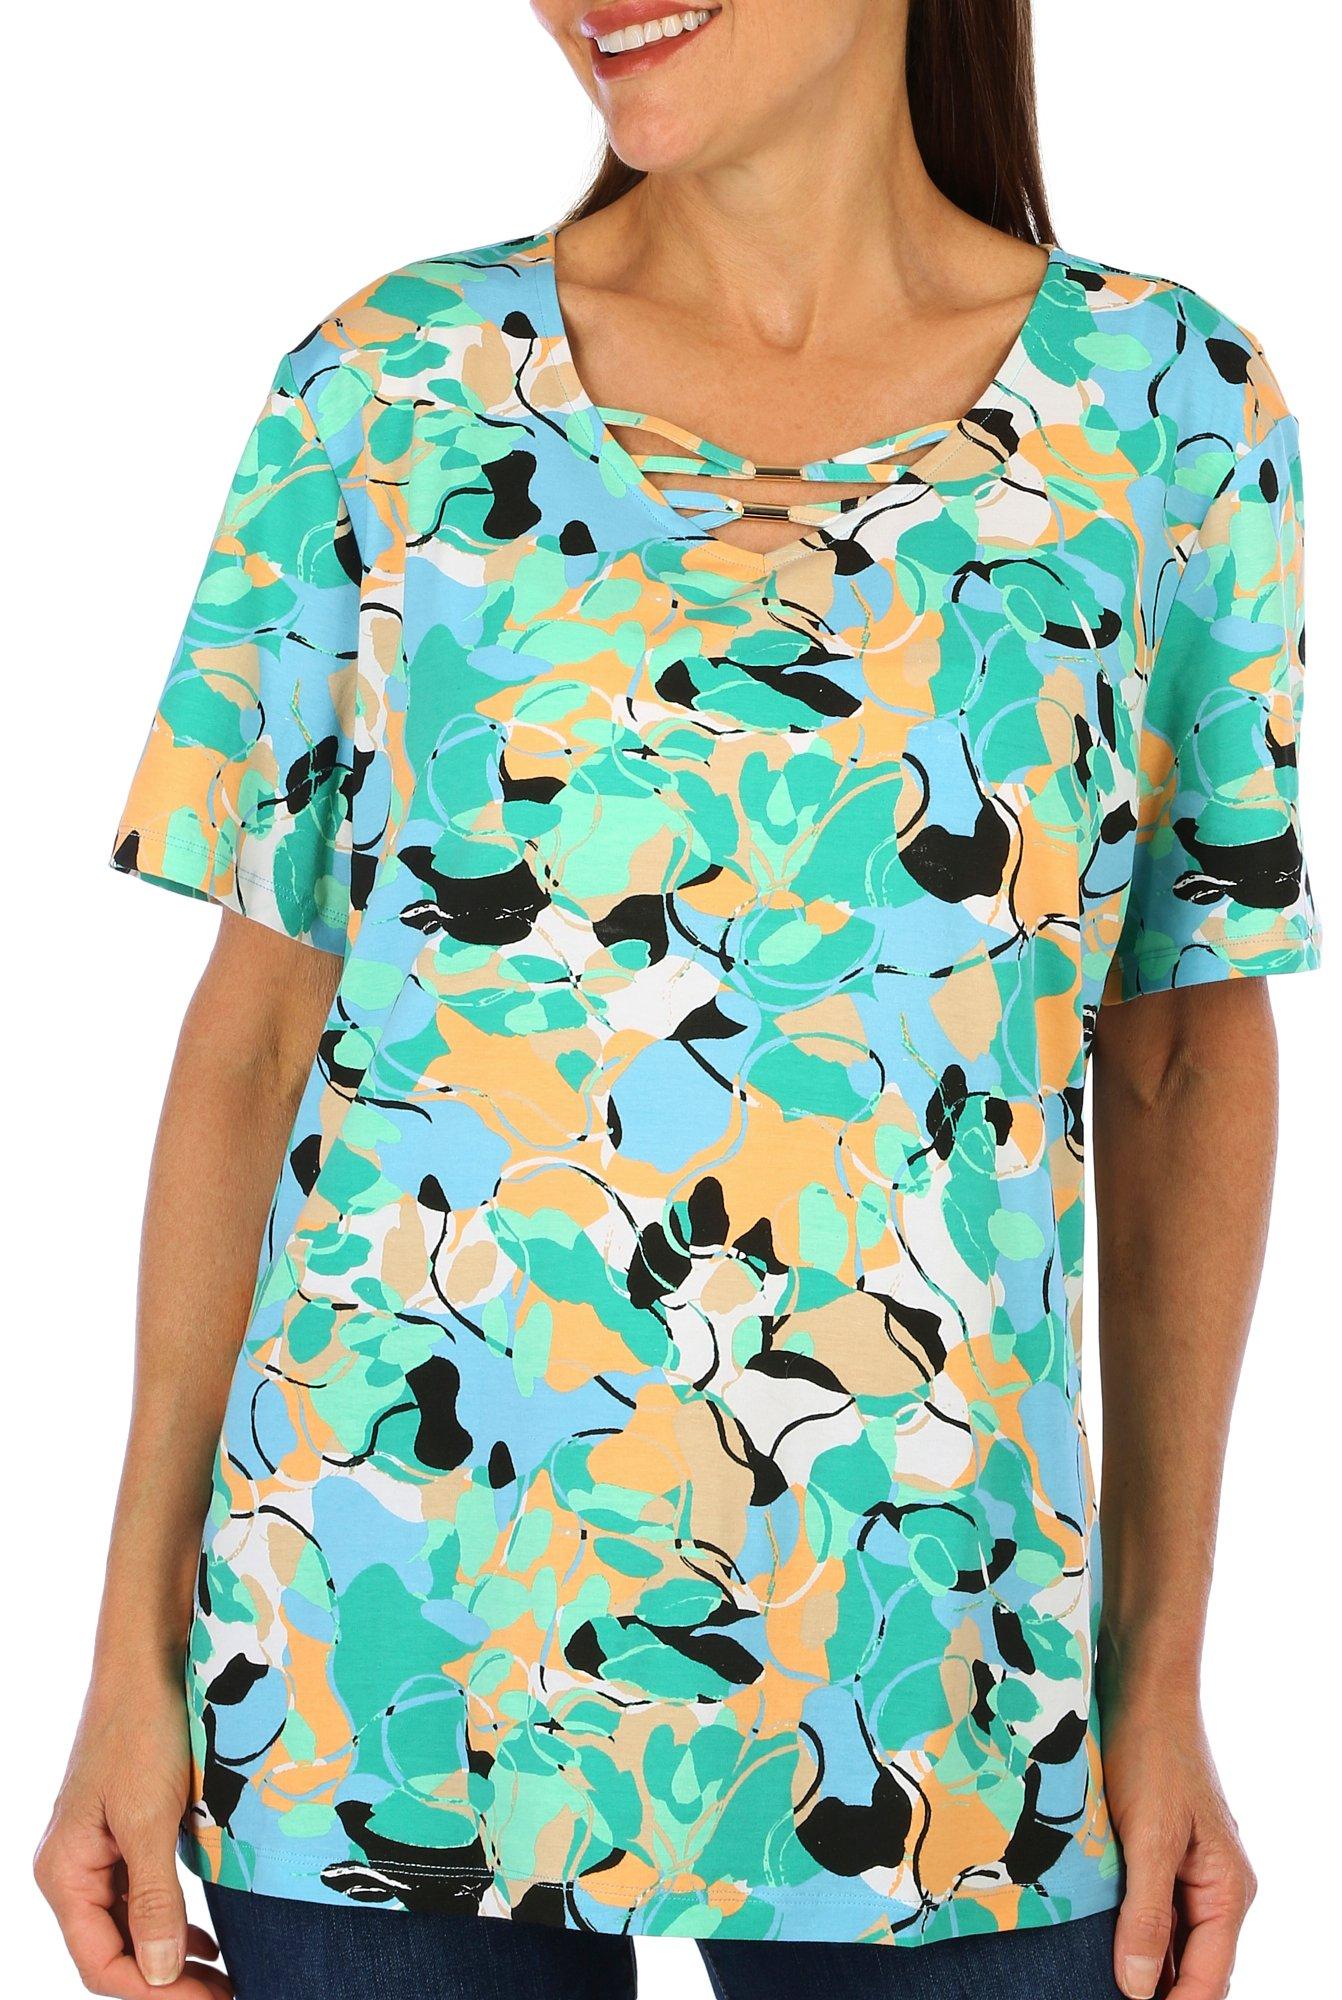 Coral Bay Womens Crisscross Bars Print Sleeve Top